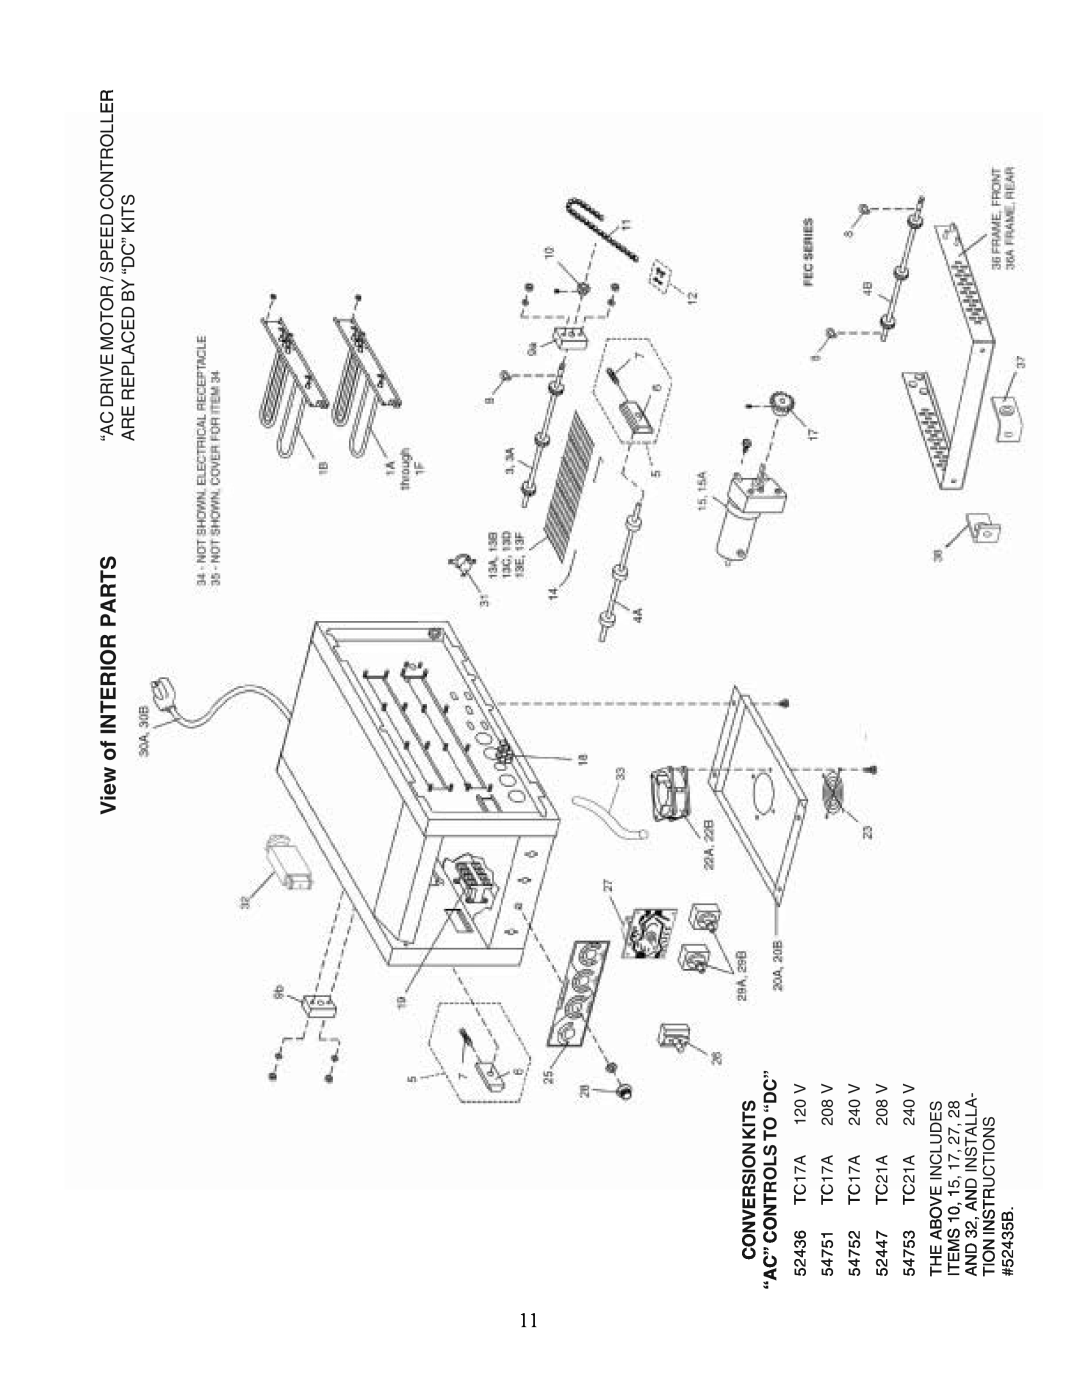 Toastmaster TC21A, TC17A manual View of INTERIOR PARTS, Conversion Kits “Ac” Controls To “Dc” 